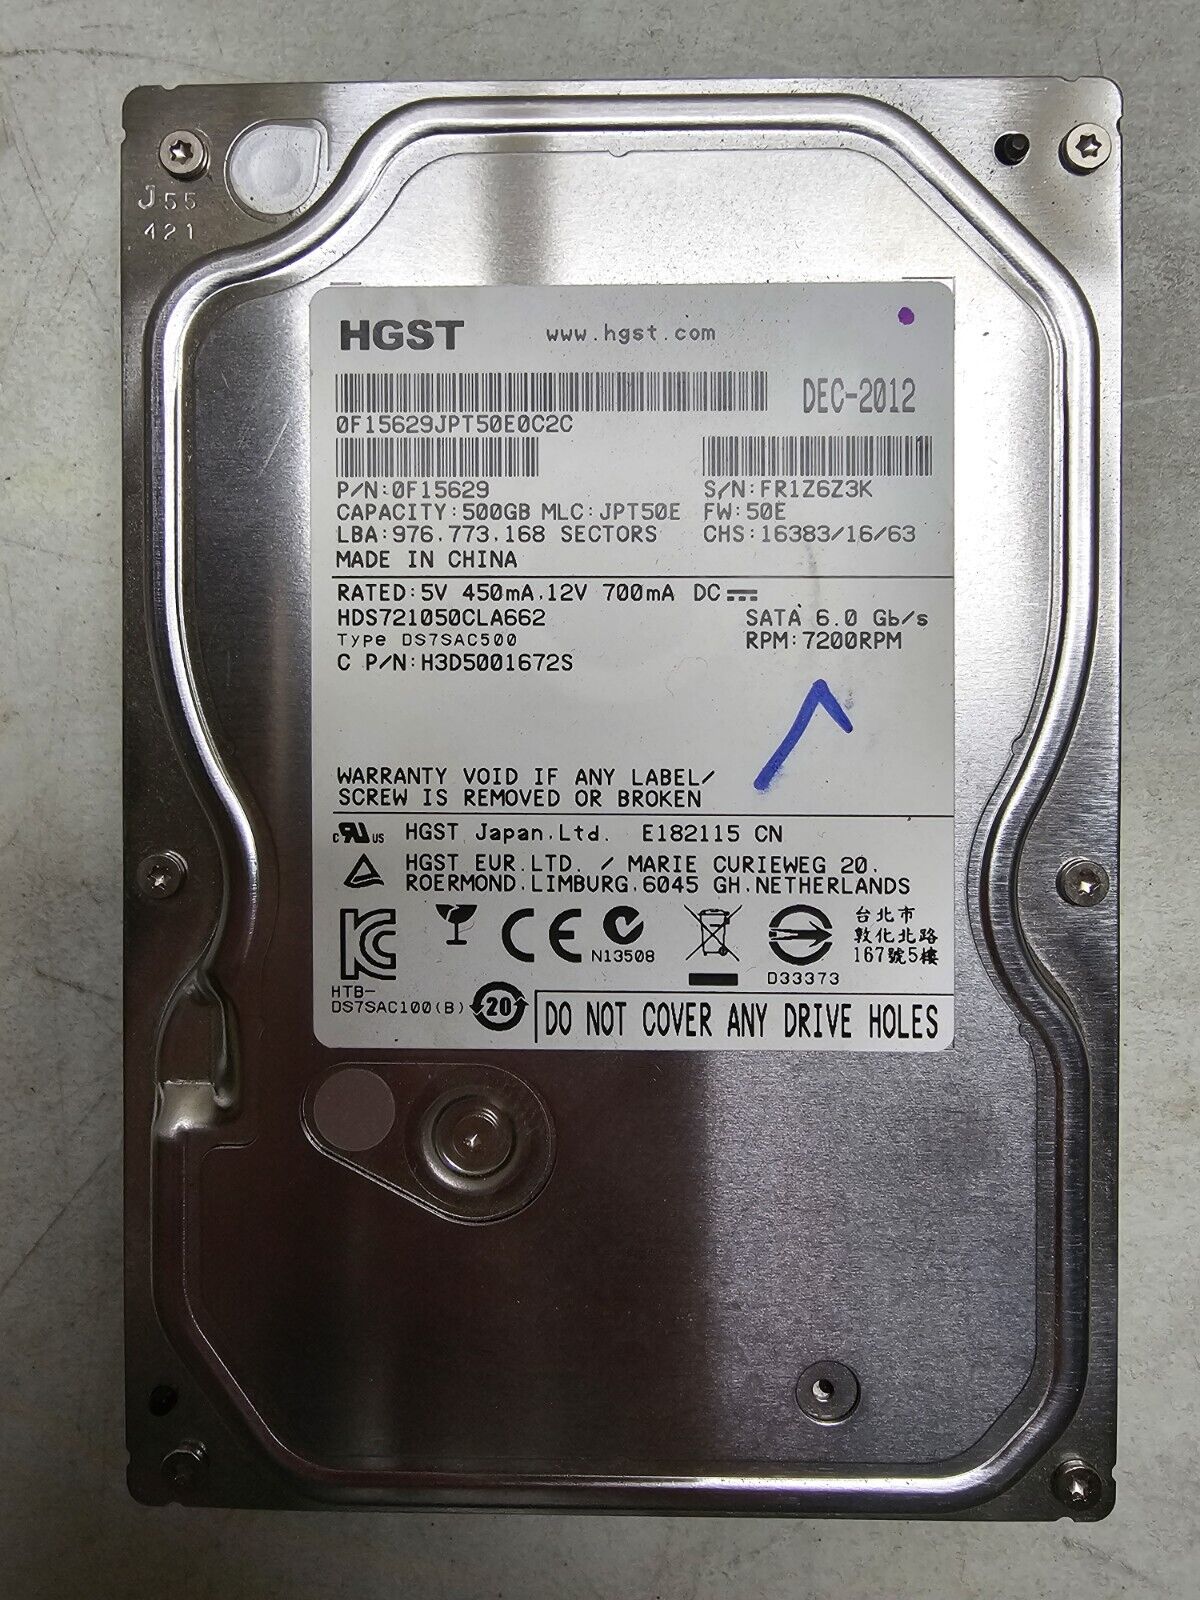 HGST 500GB 7200RPM SATA Internal Desktop Hard Drive Mo: HDS721050CLA662 Tested